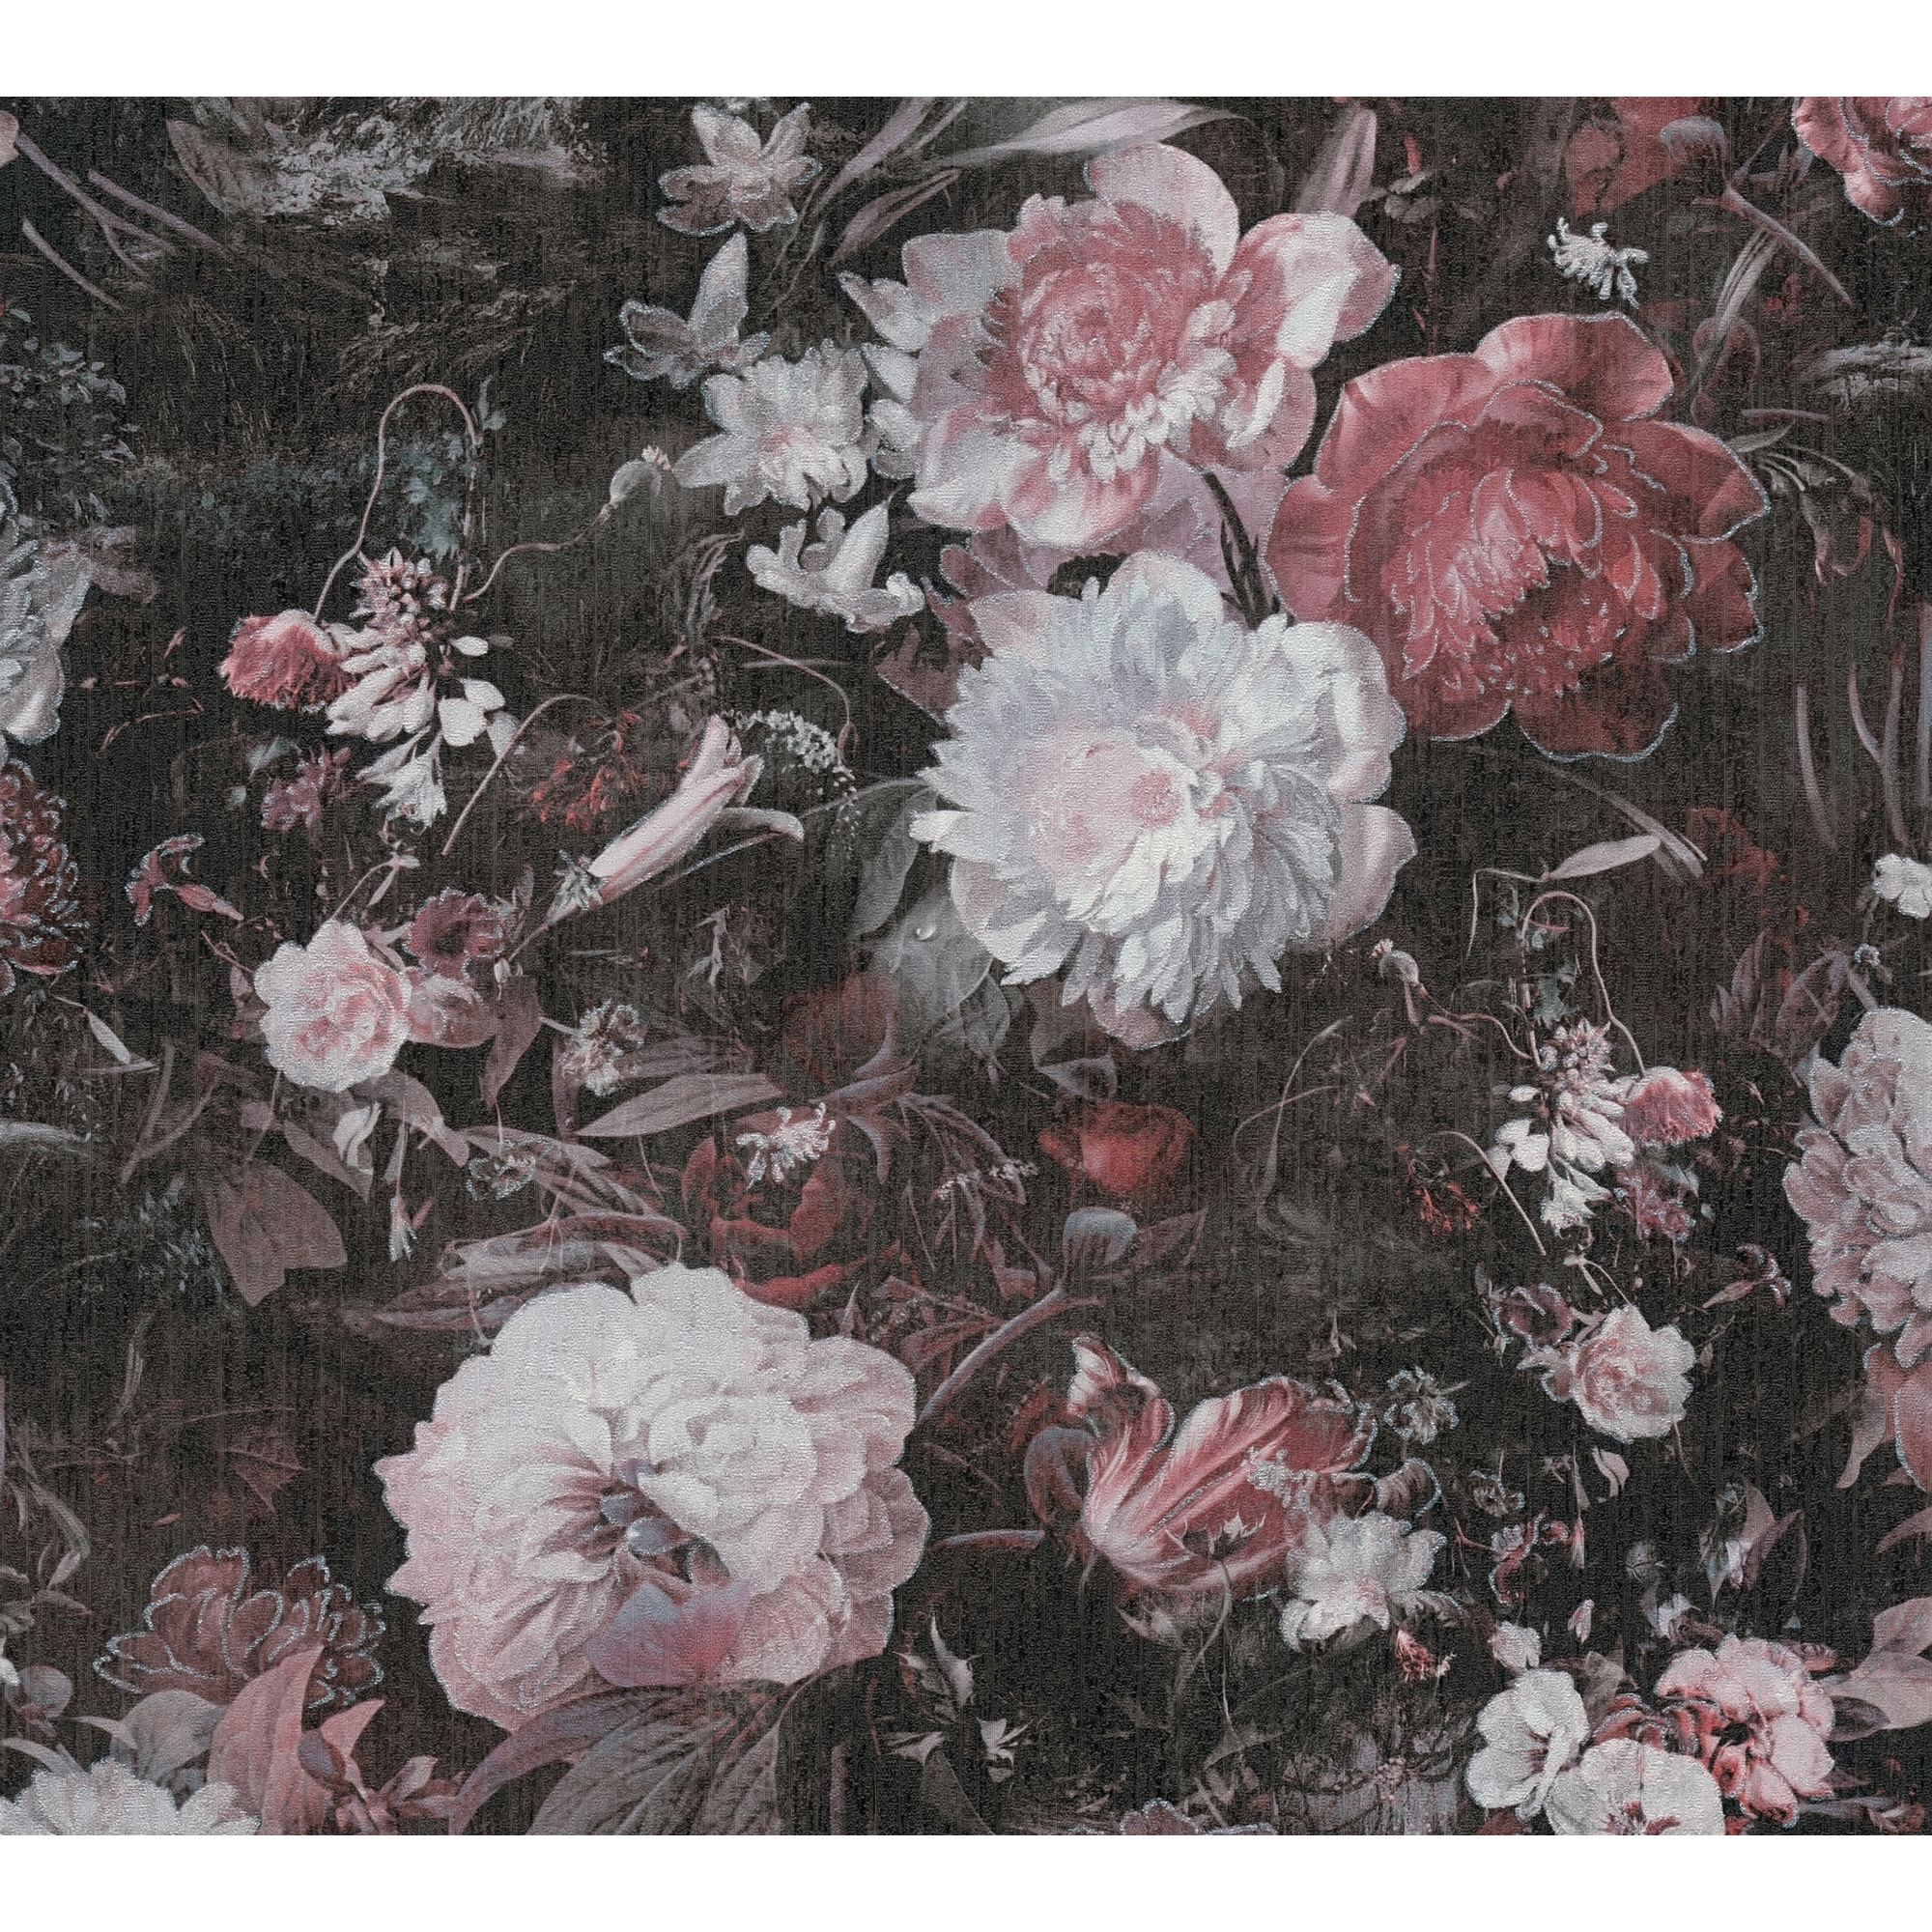 Vliestapete 'The BoS' Vintageblumen schwarz/rot 10,05 x 0,53 m + product picture